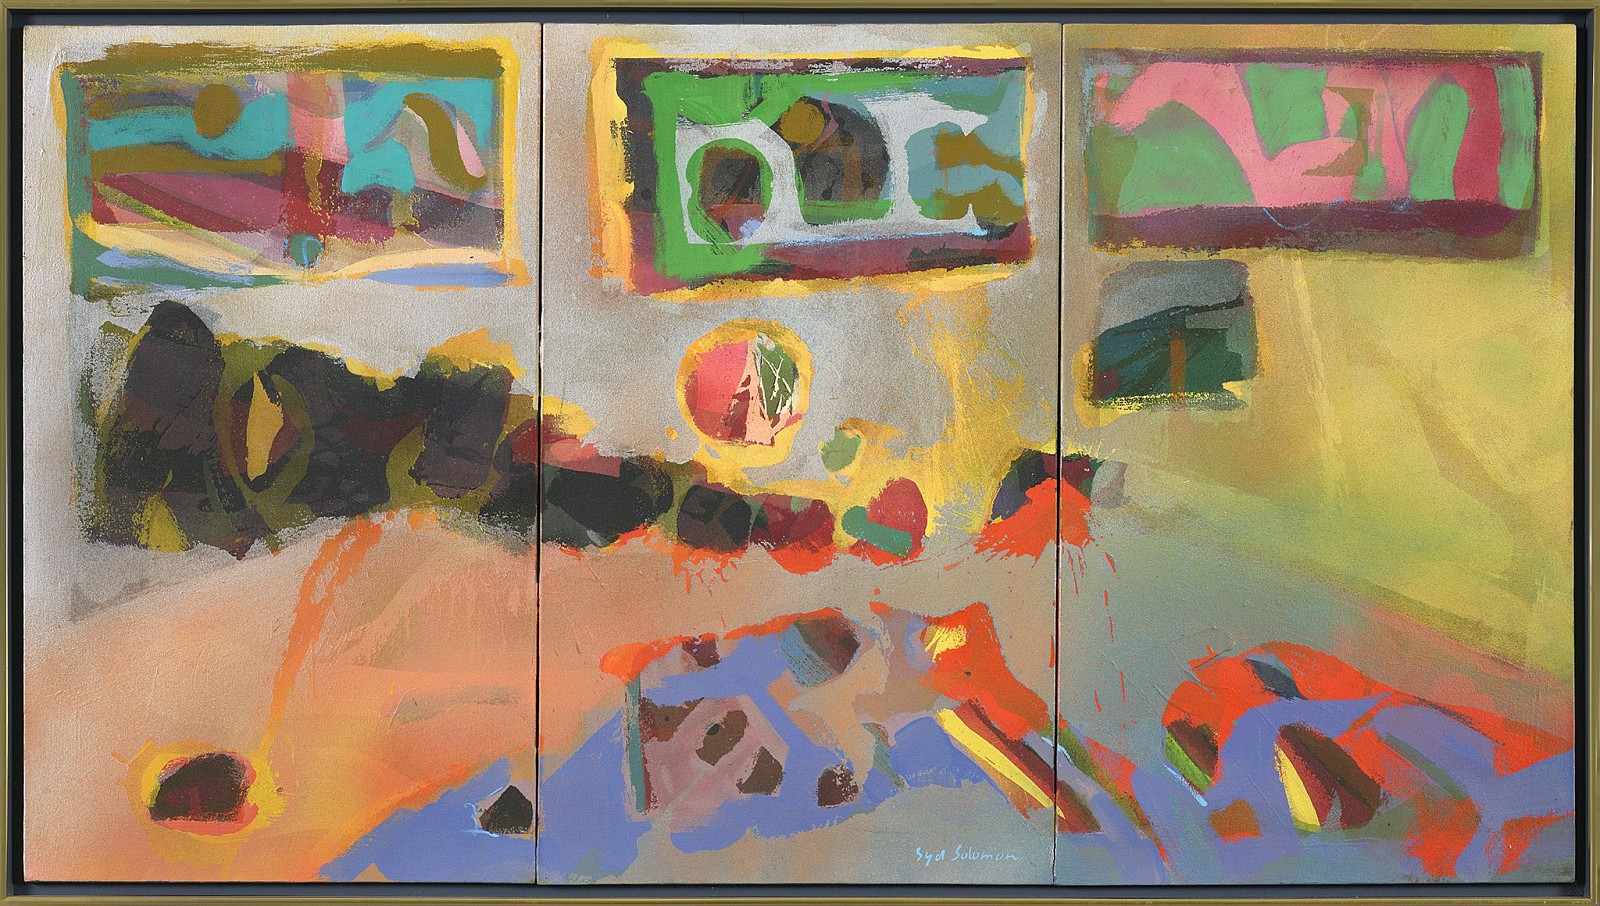 Syd Solomon, Tri-Rock Island-Gallery, 1975
Acrylic and oil on canvas, 30 x 54 in. (76.2 x 137.2 cm)
SOL-00219